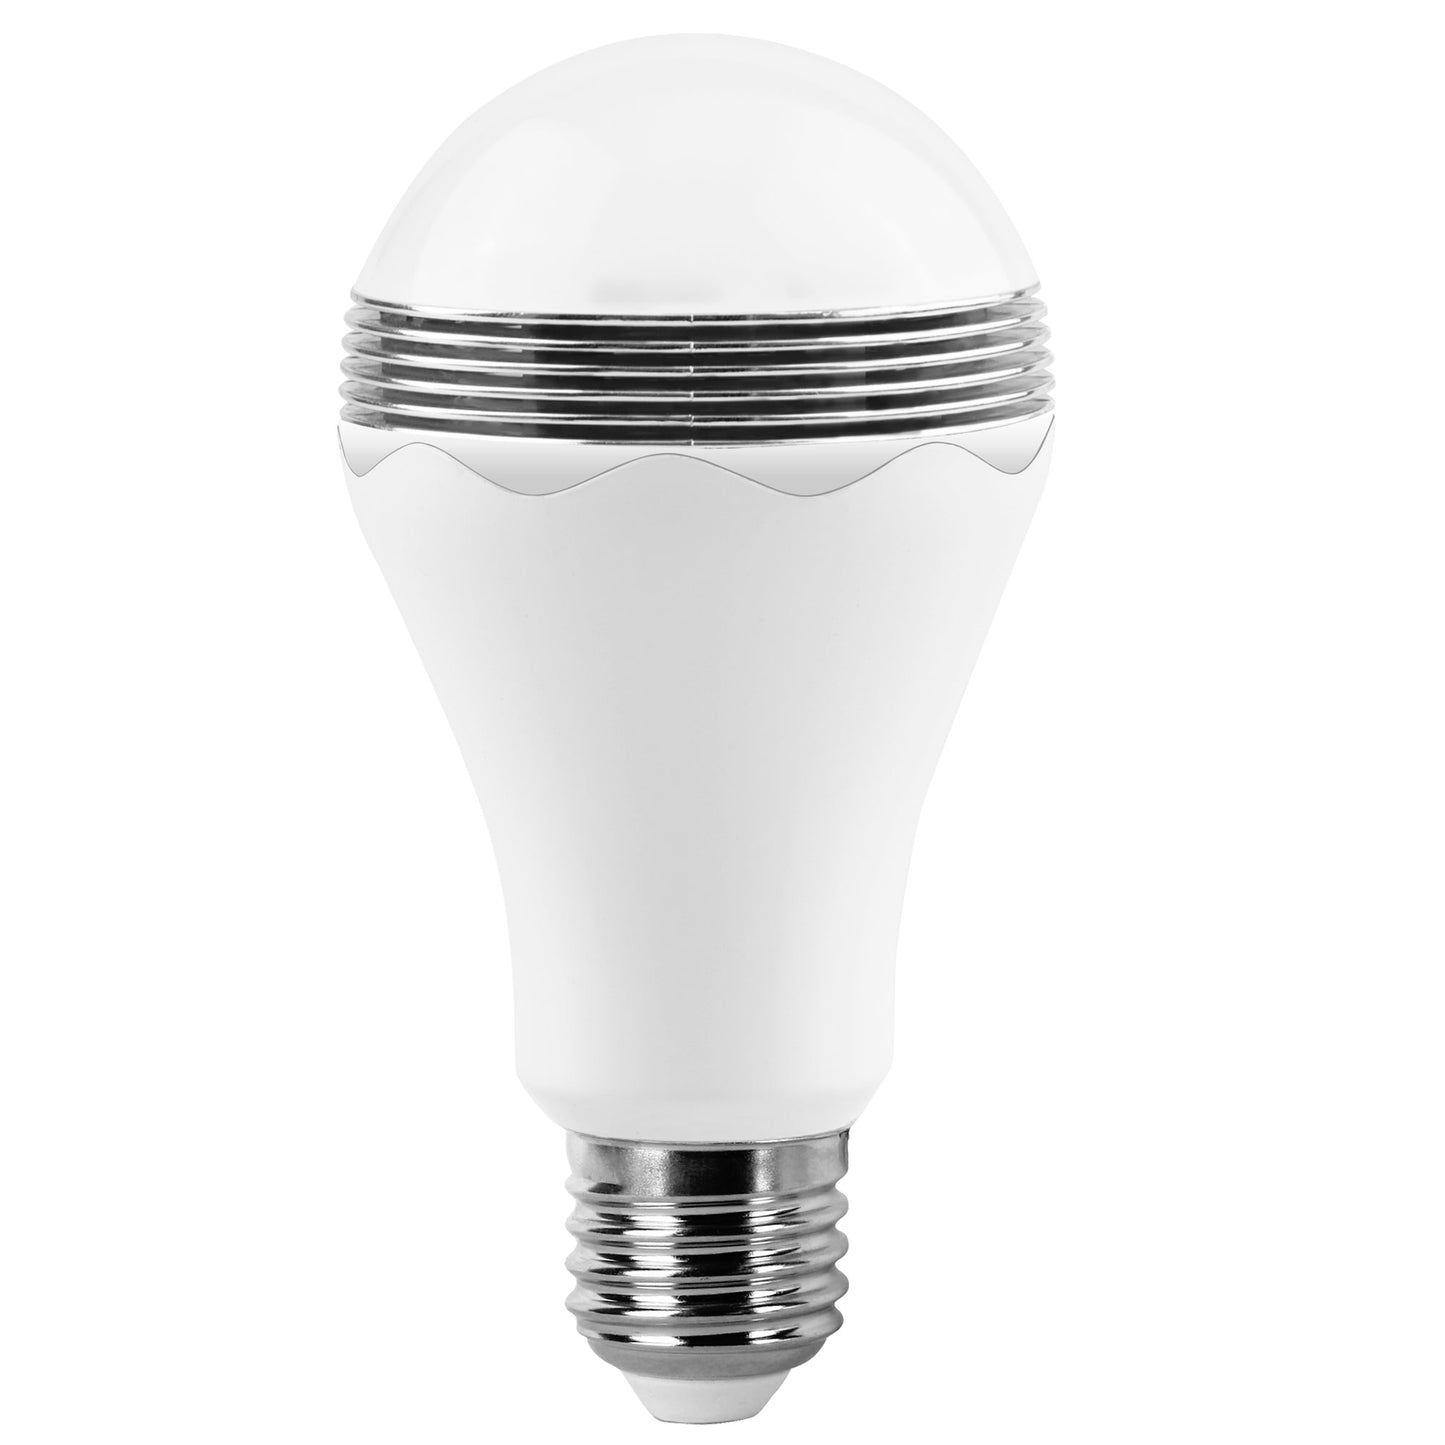 LED LAMP E27 7W A60 WITH BLUETOOTH SPEAKER 230V AC 